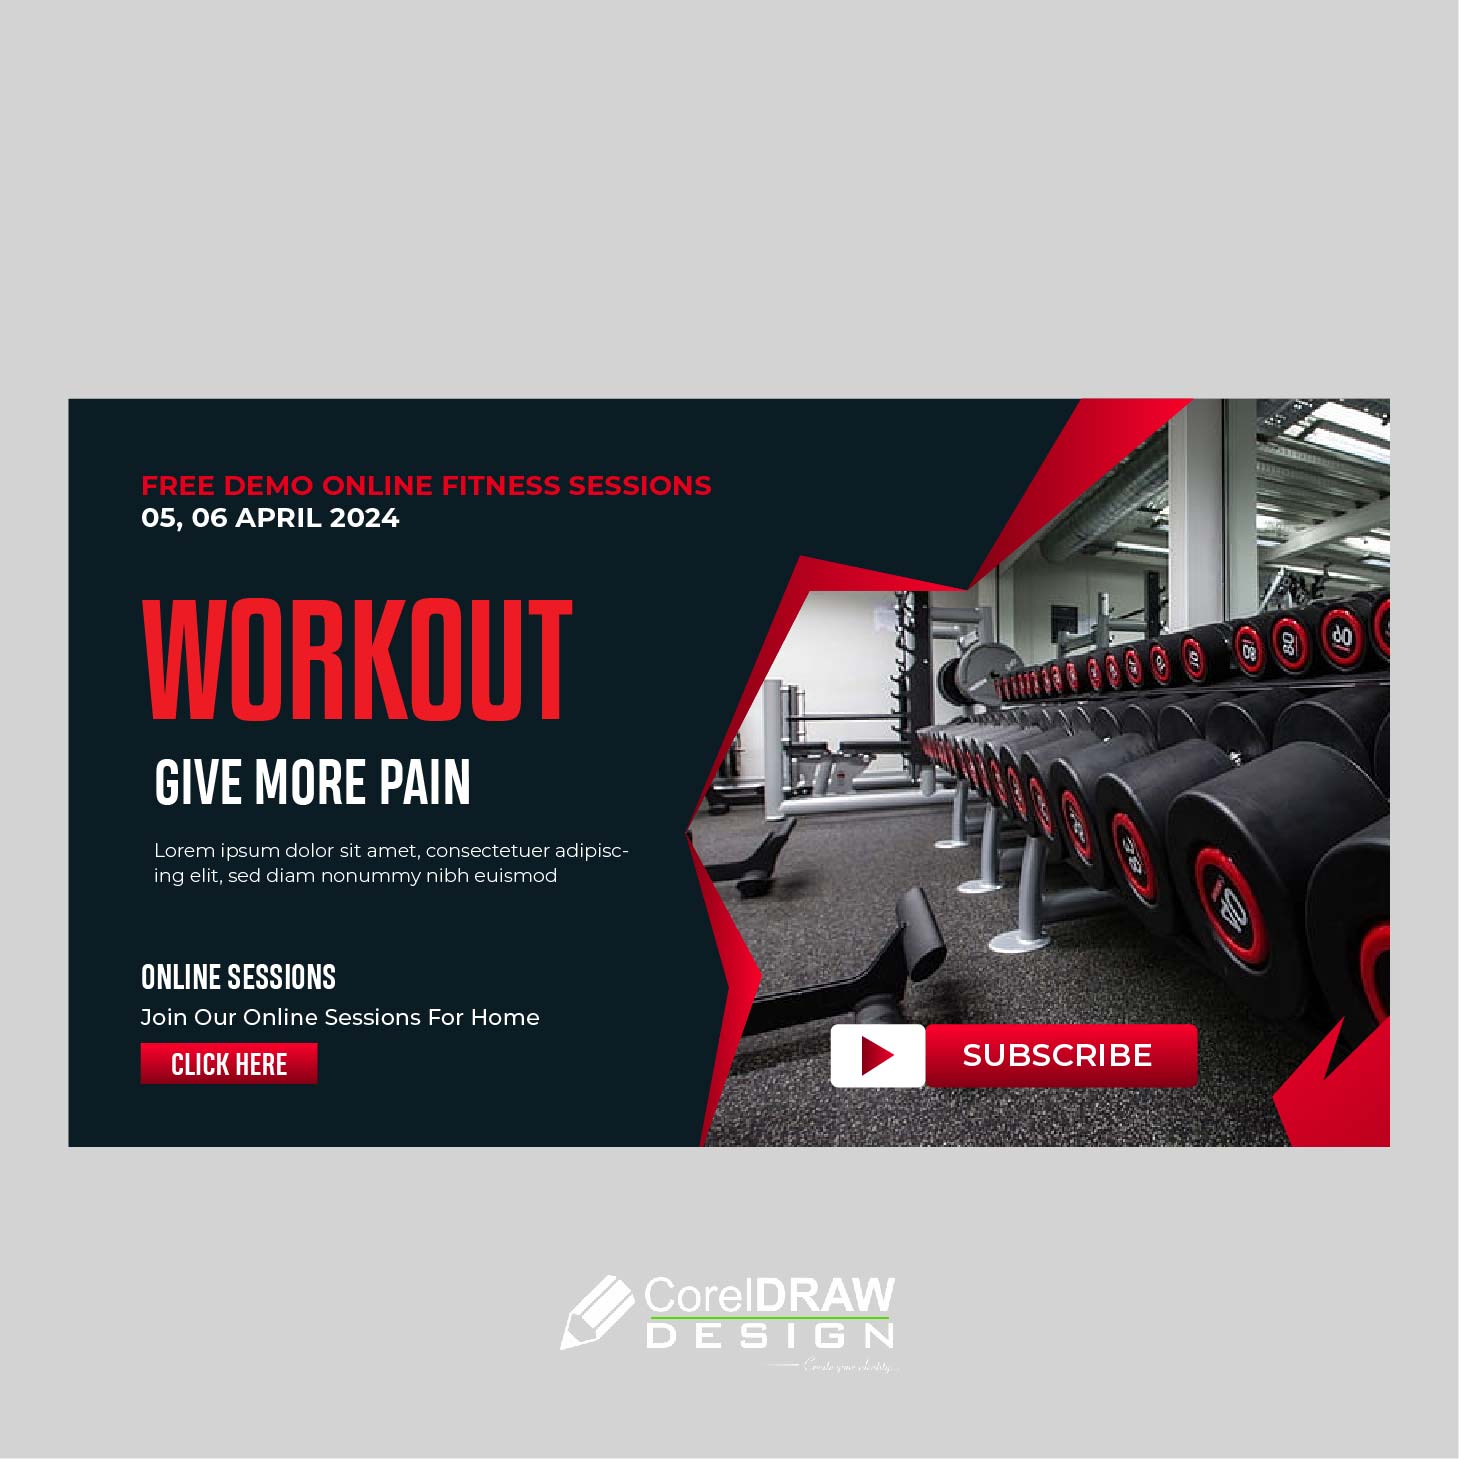 Corporate duotone fitness duotone advertisement vector free